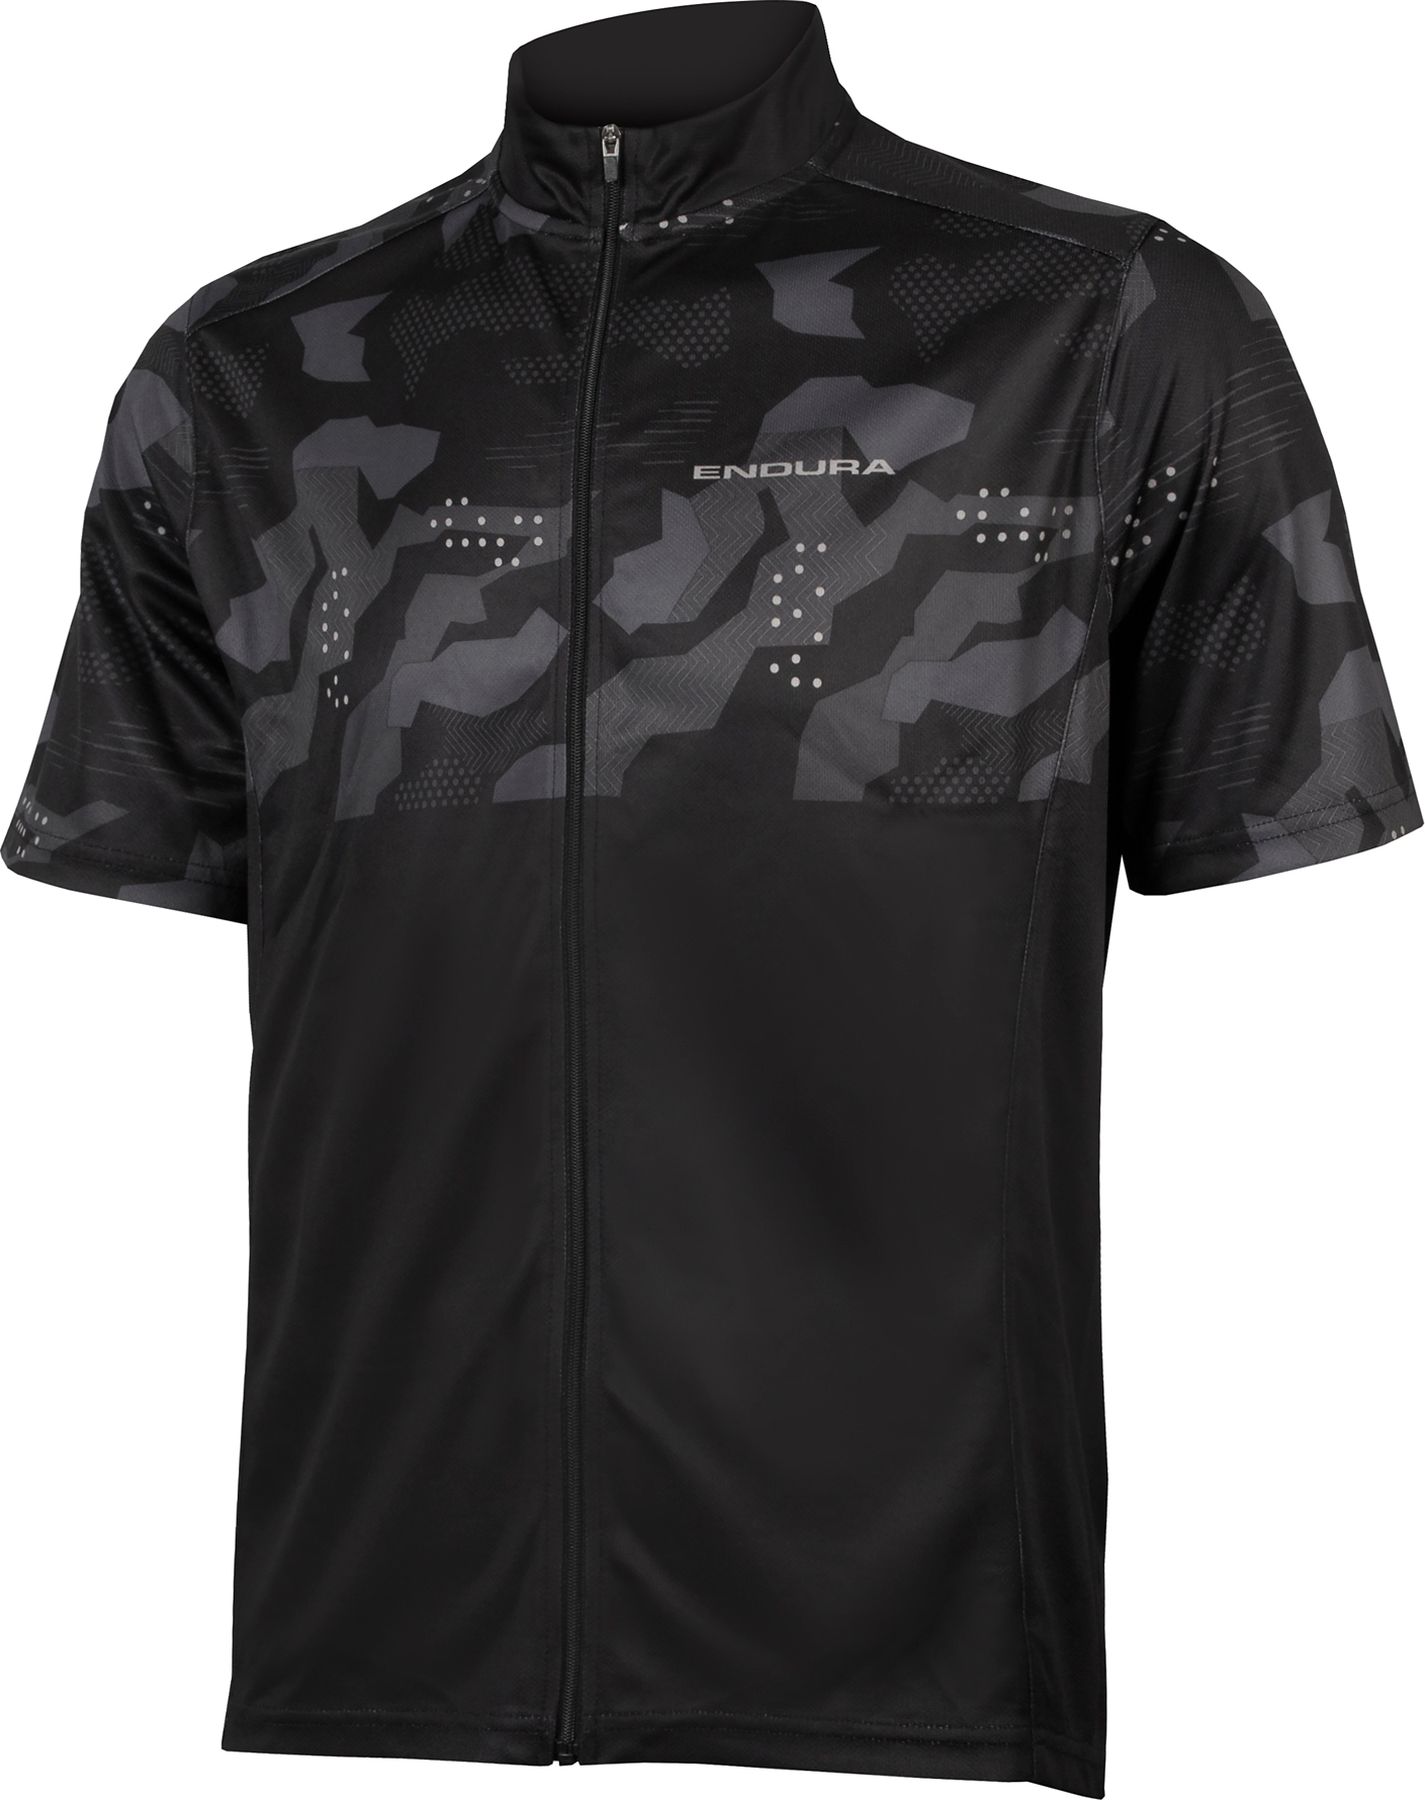 Endura Hummvee Ray Short Sleeve Jersey - Jerseys - Cycle SuperStore